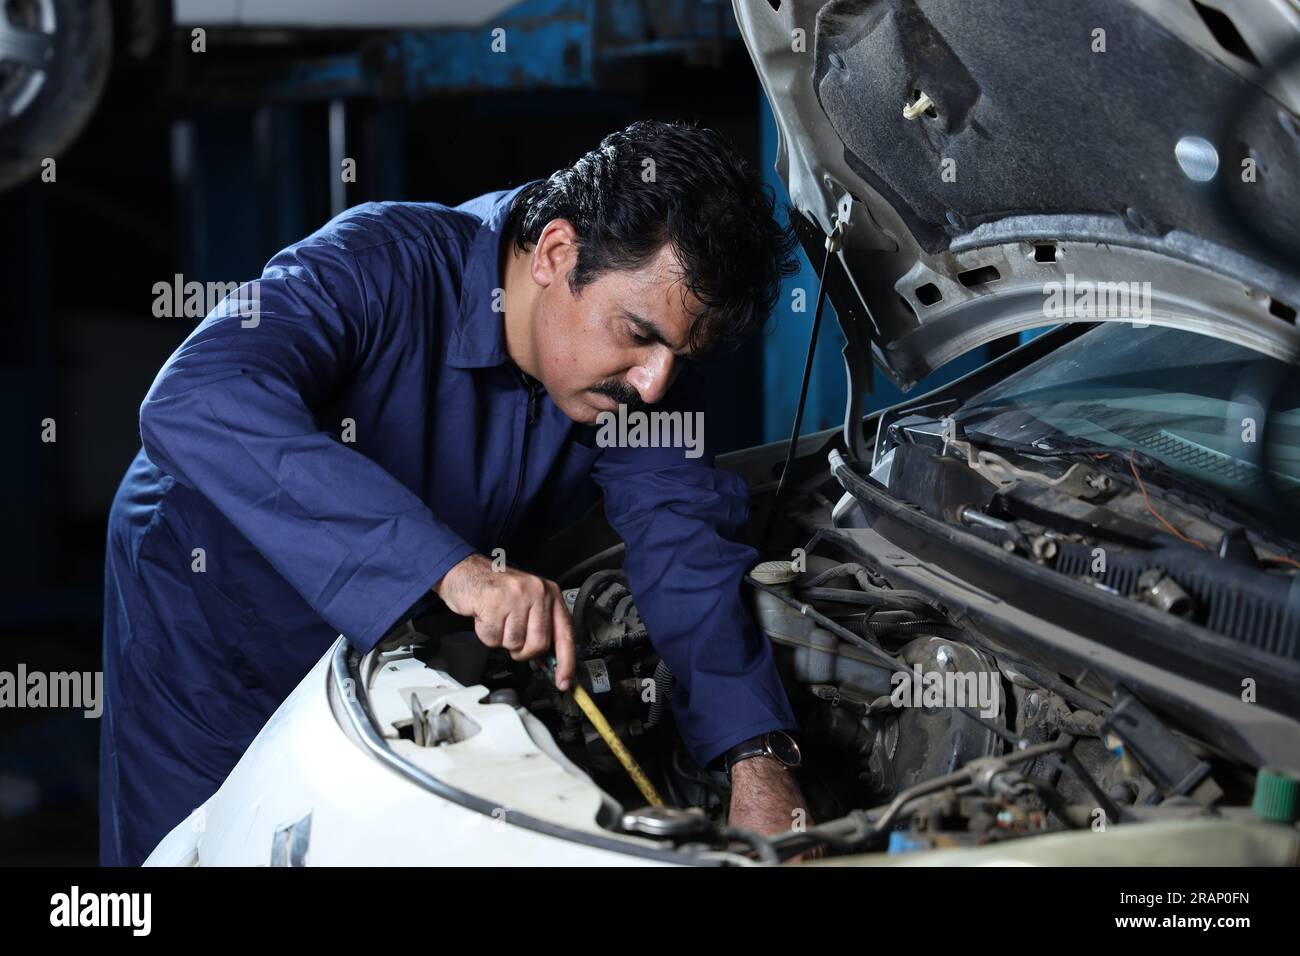 Auto Mechanic Tools High Quality Photo Stock Photo 2313749517